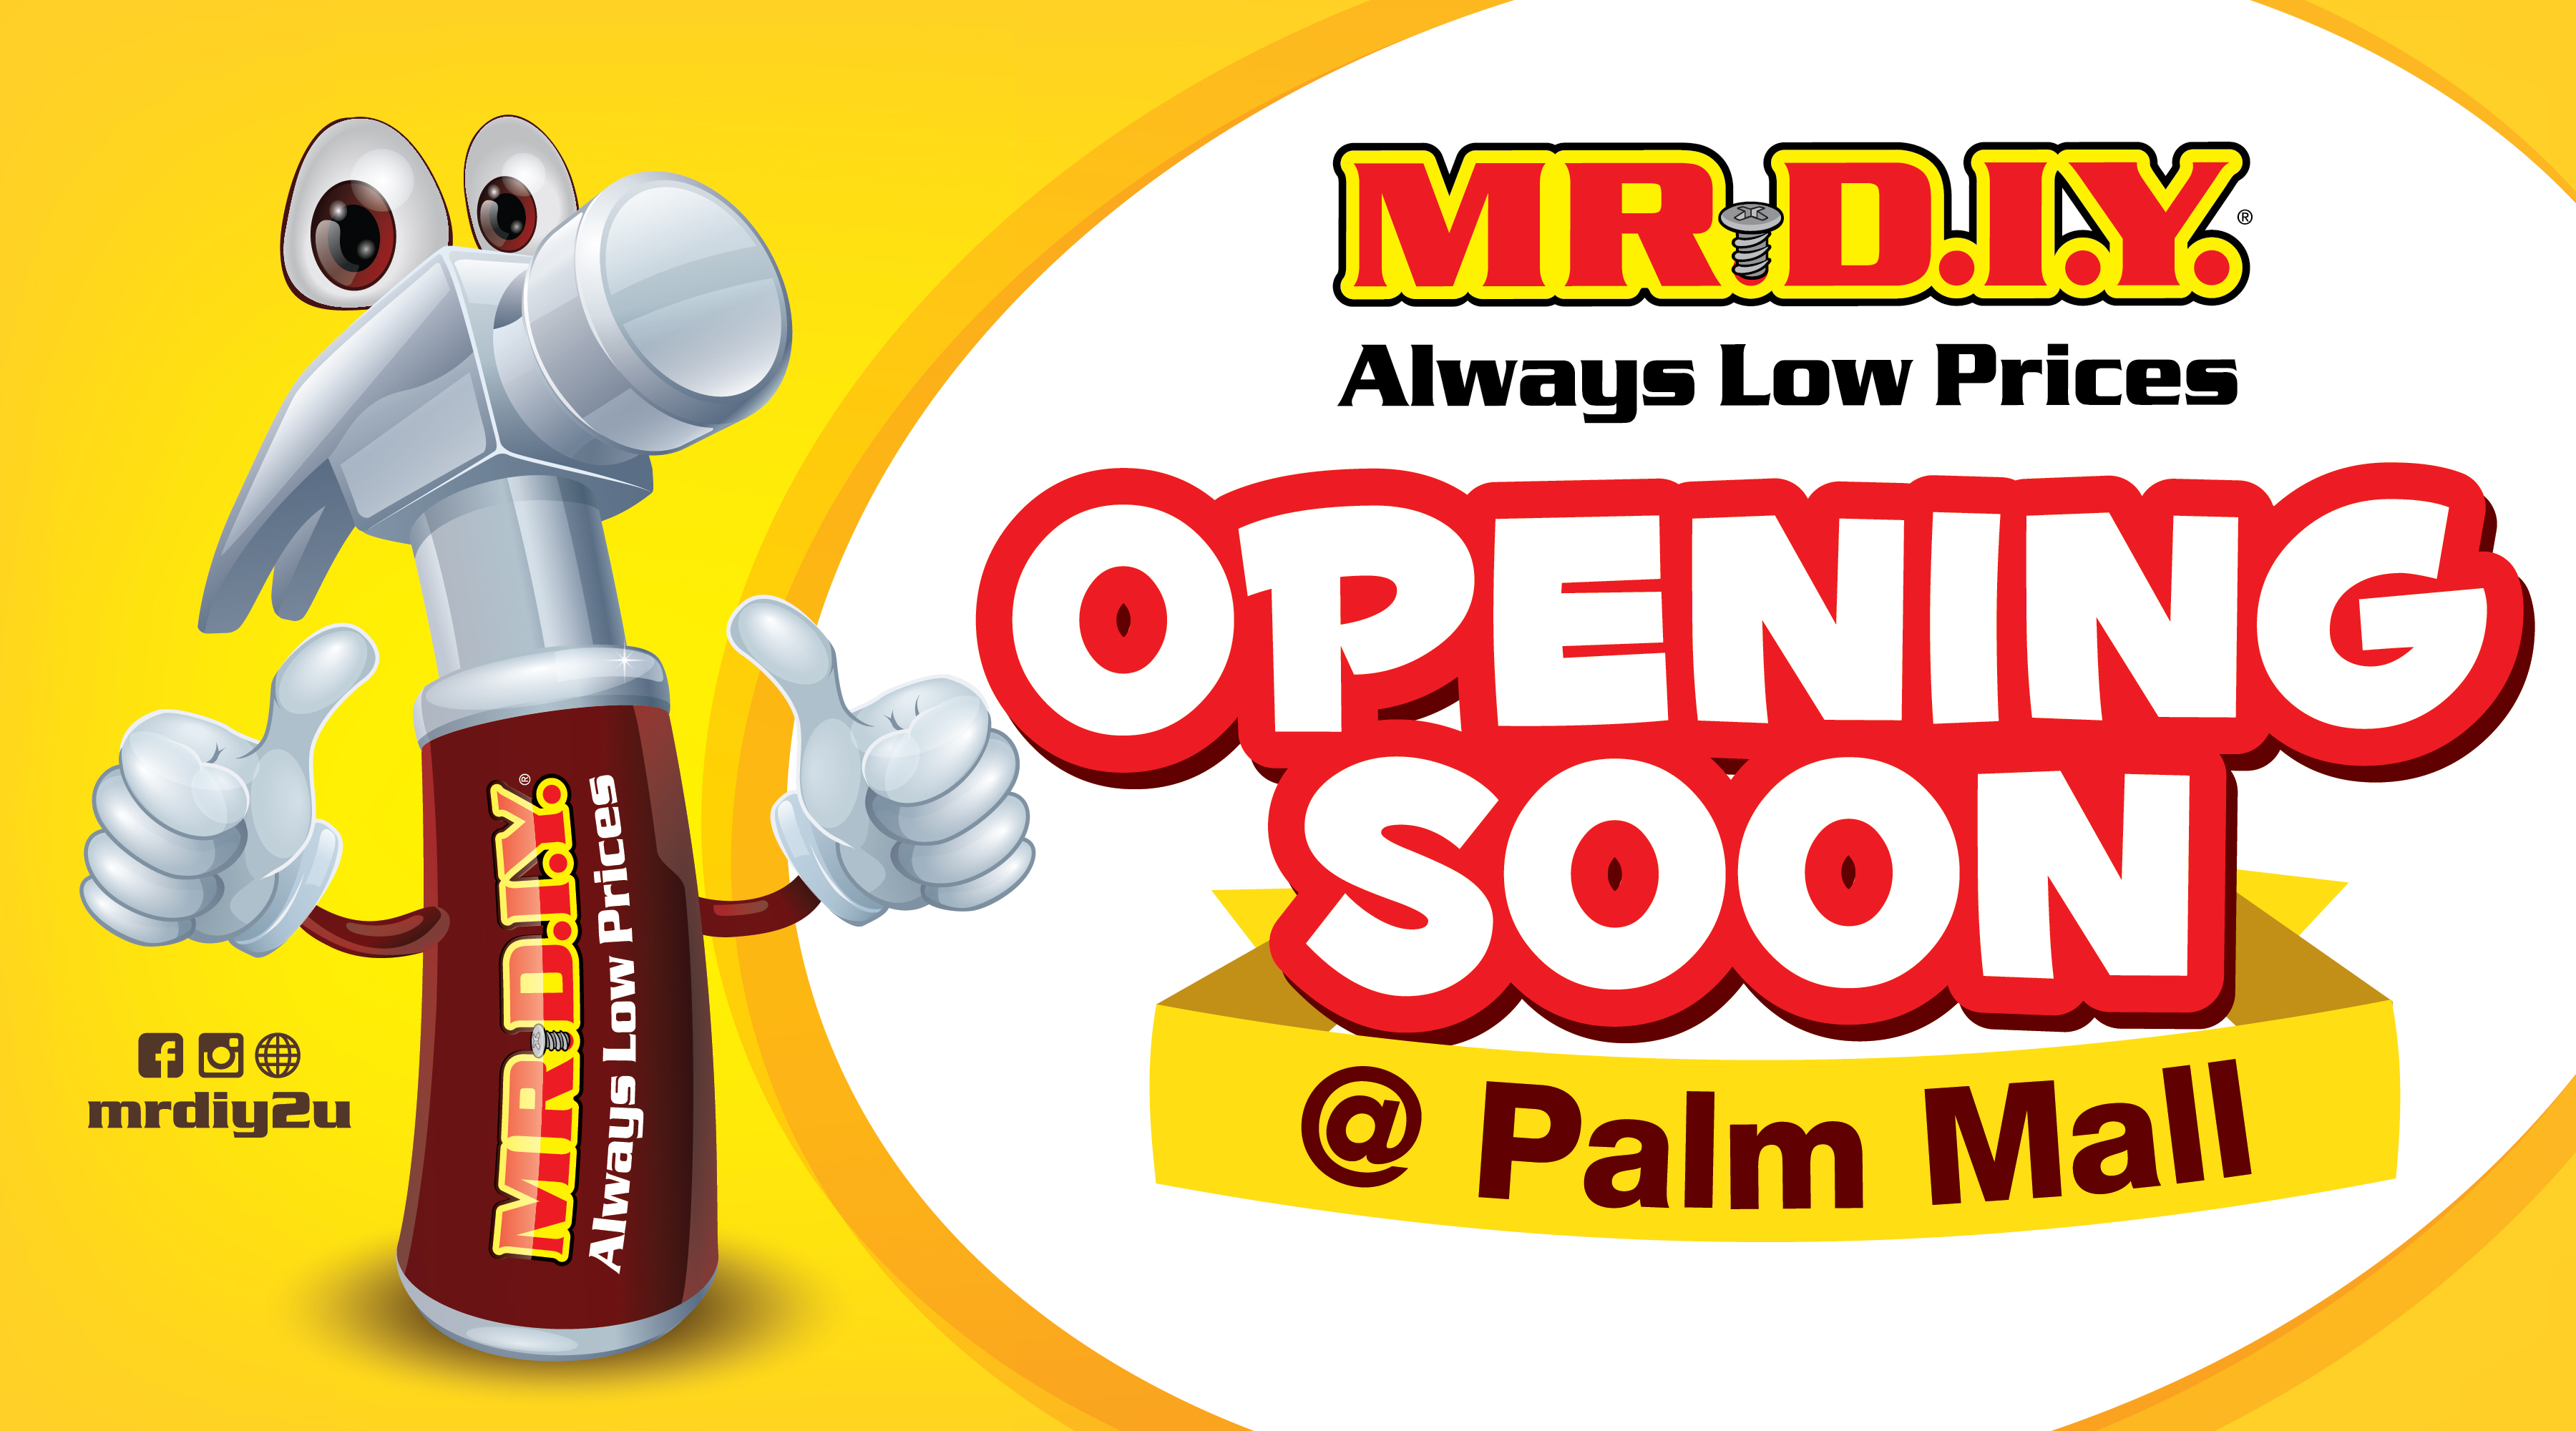 Opening Soon - MR D.I.Y.